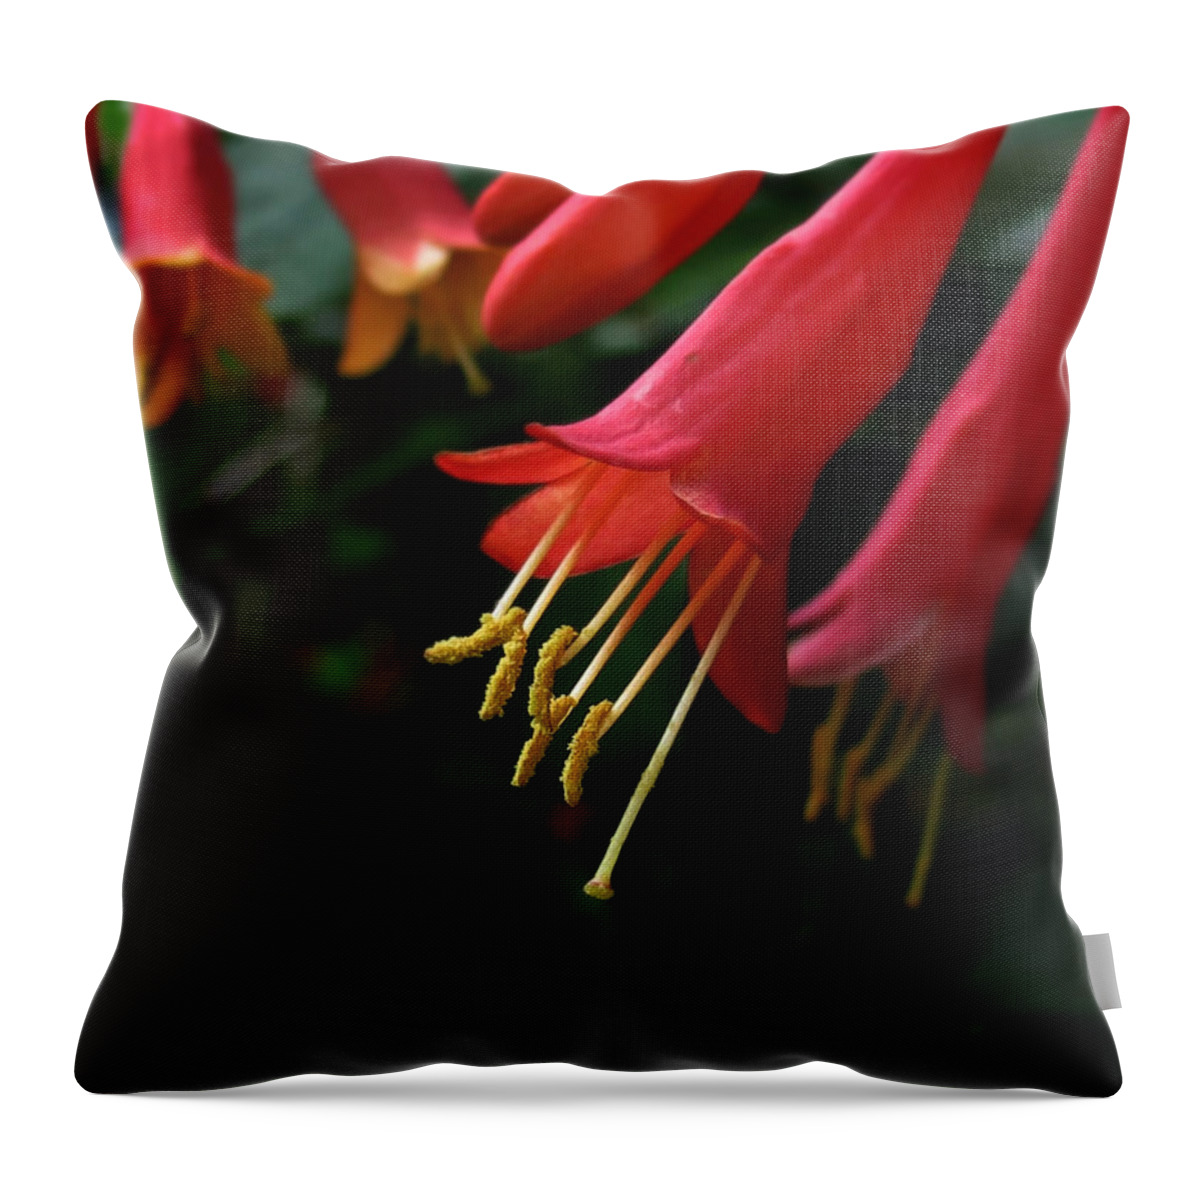 Flower Throw Pillow featuring the photograph Crimson Honey by Deborah Smith